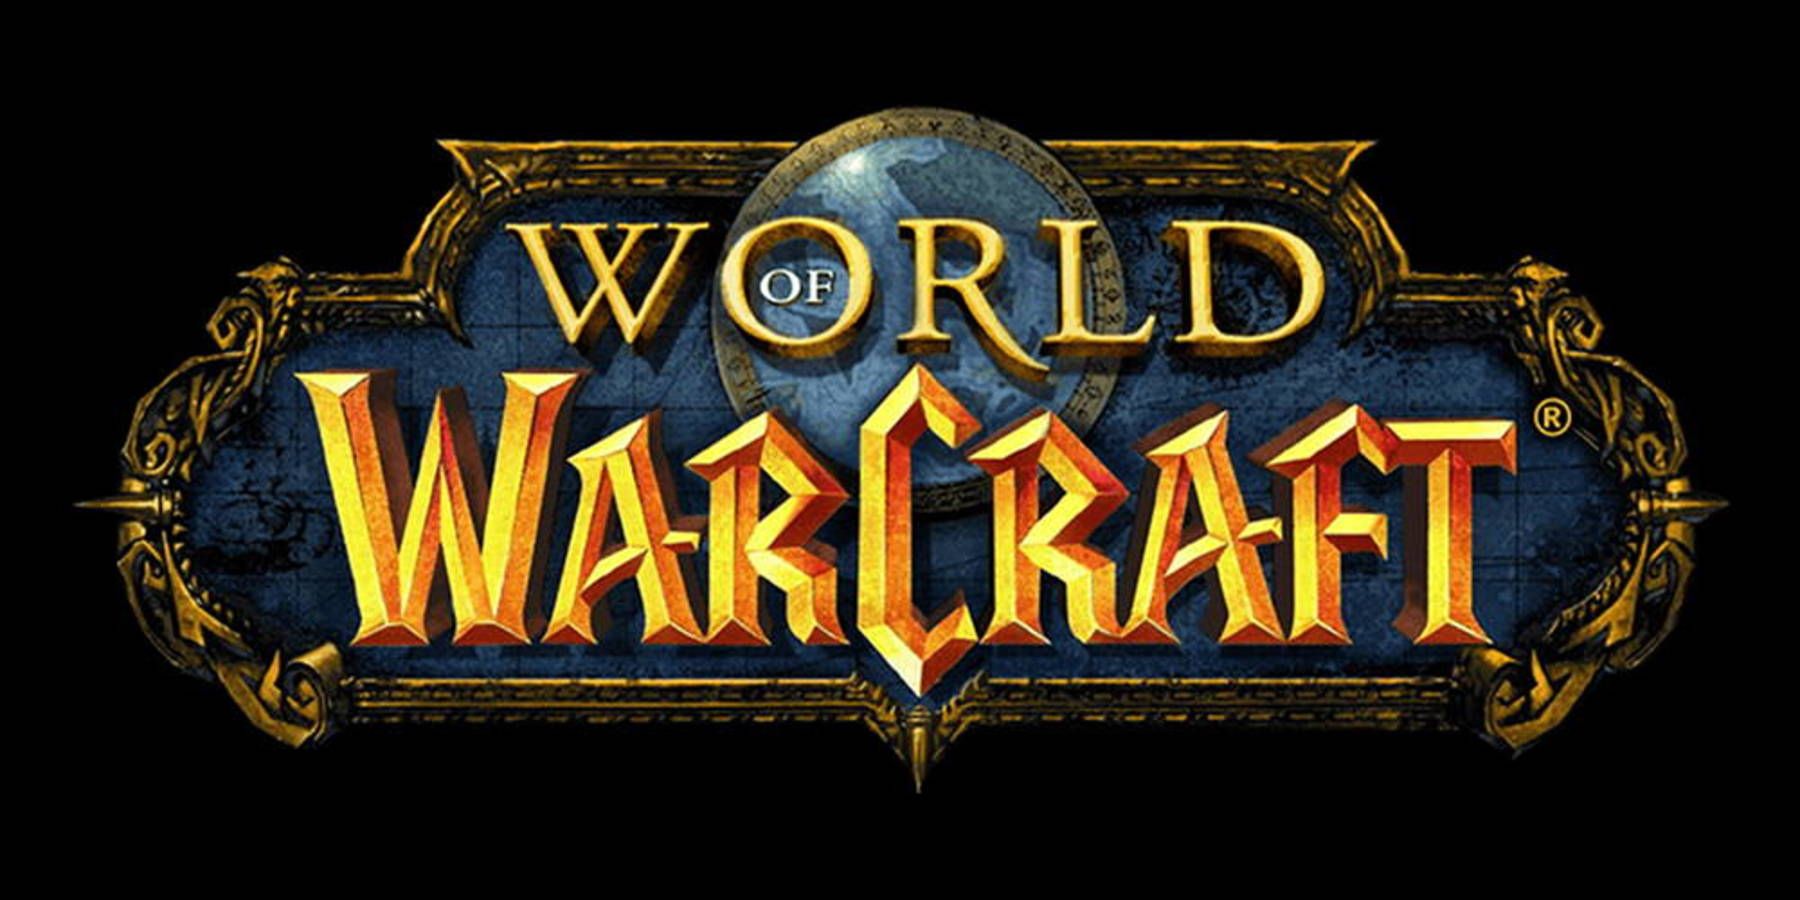 Permainan mudah alih Warcraft dilaporkan dibatalkan